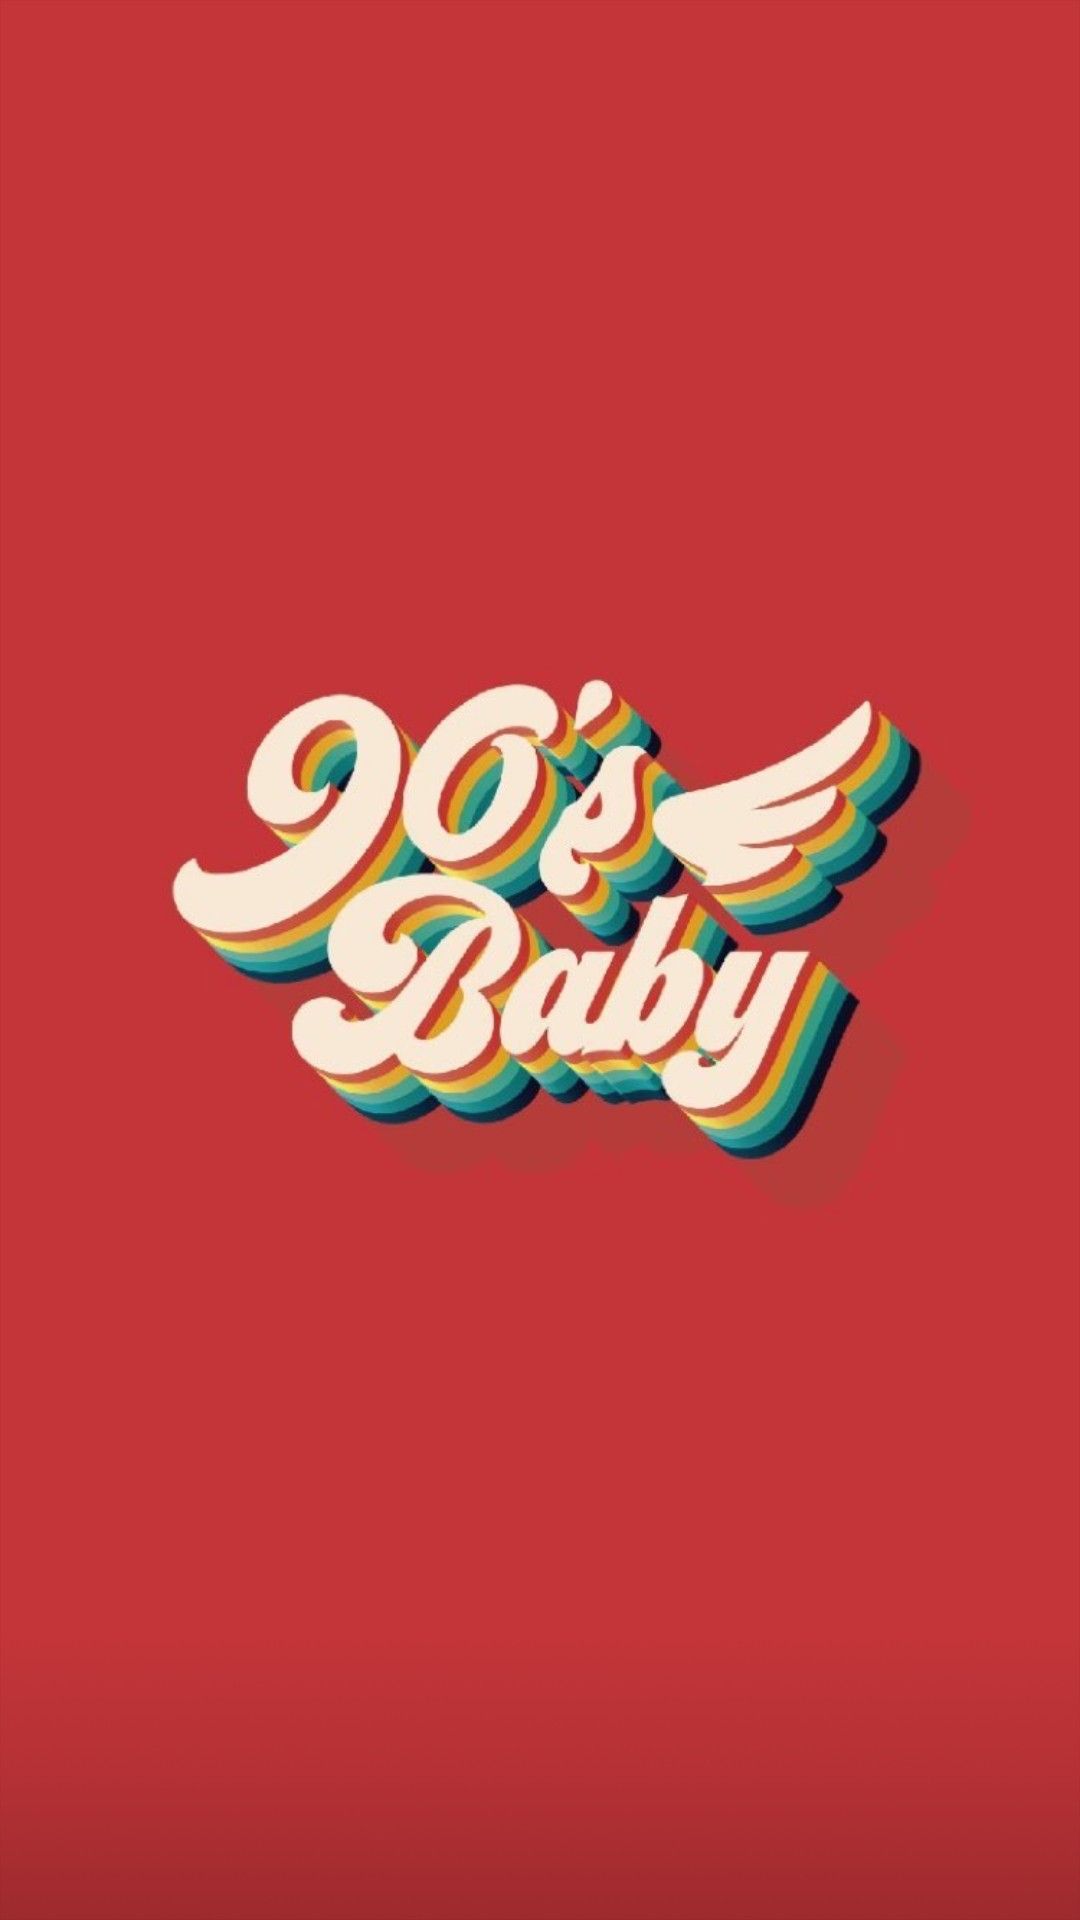 90s baby logo - 90s